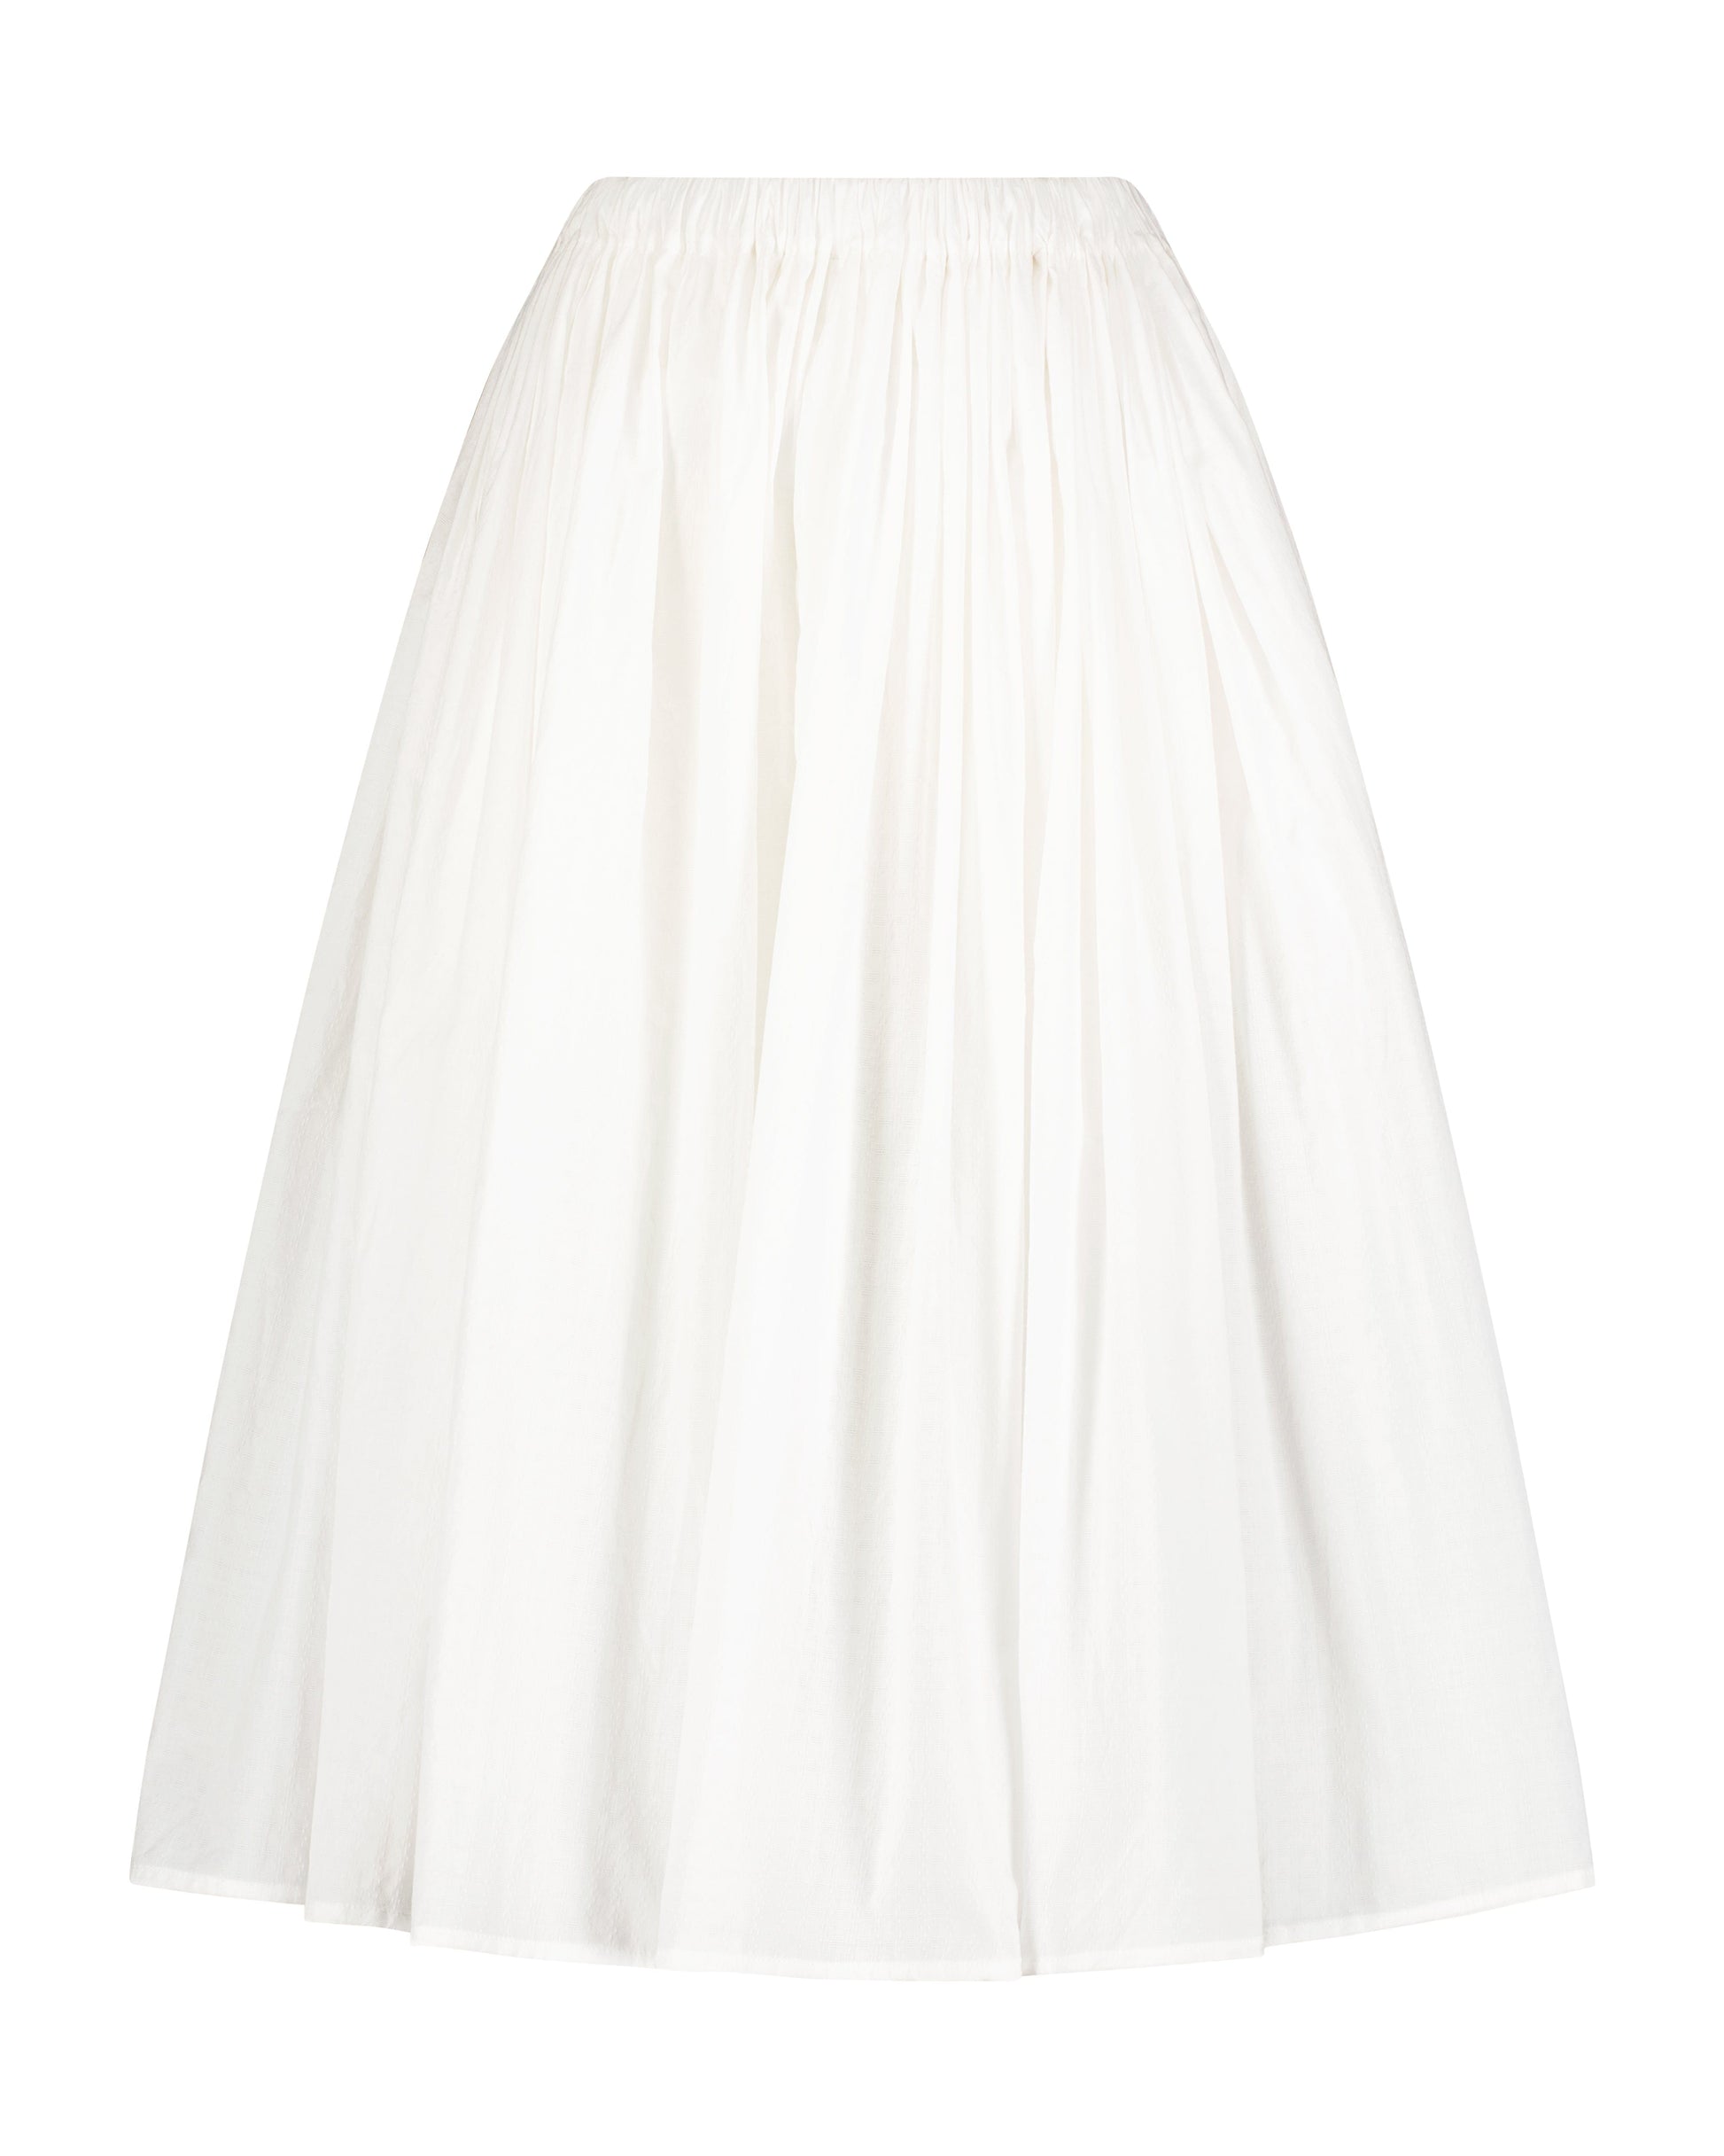 Erica Skirt in Summer Cotton Skirts CHRISTINE ALCALAY   